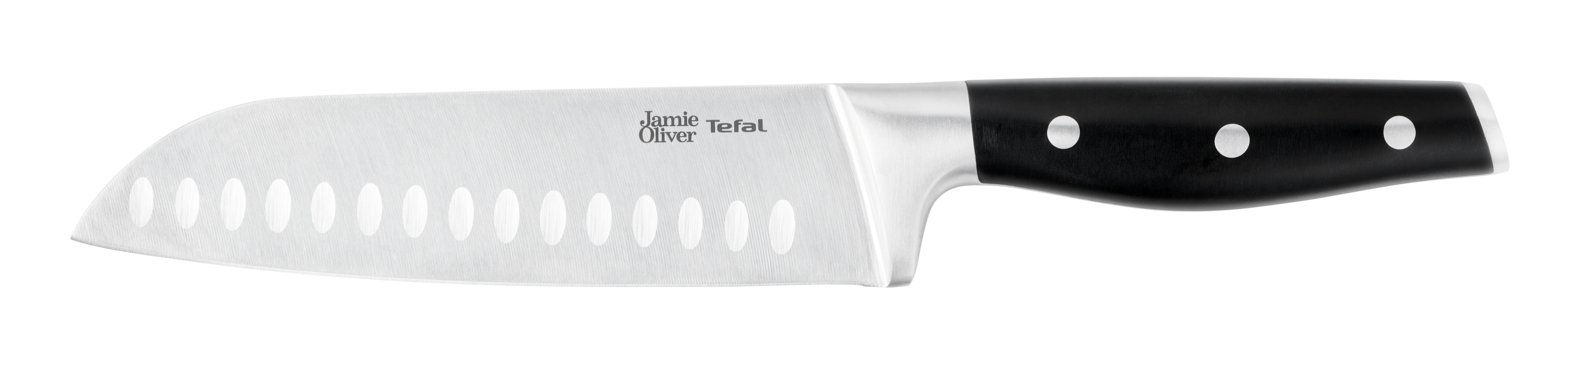 Нож сантоку Jamie Oliver 18 см K2671844 нож кухонный tefal jamie oliver поварской нержавеющая сталь 20 см рукоятка пластик k2670144